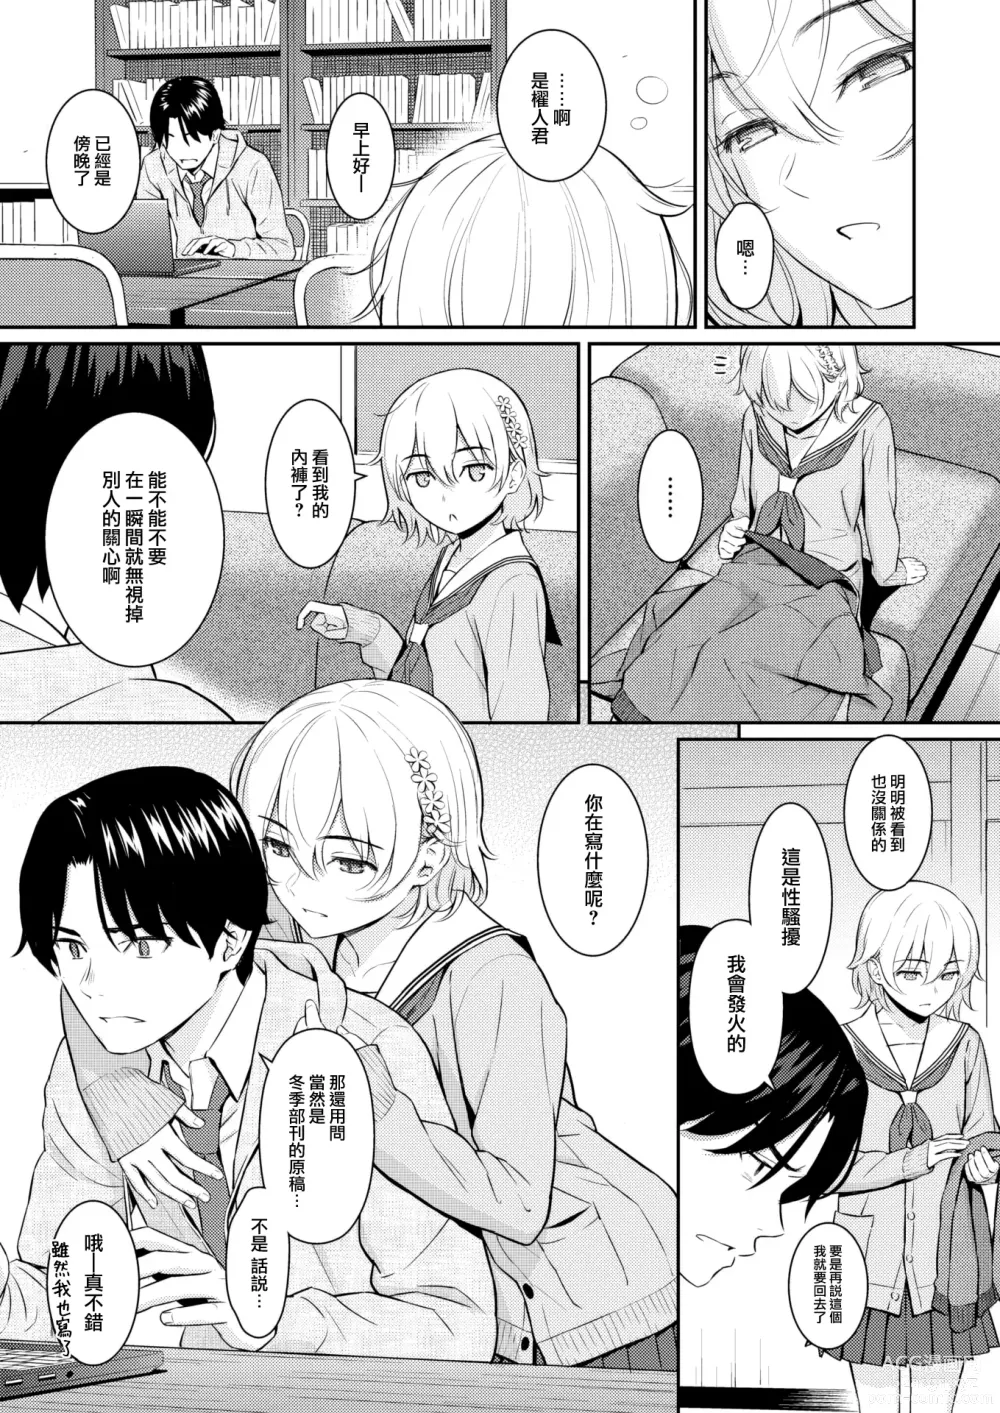 Page 6 of manga Pure White